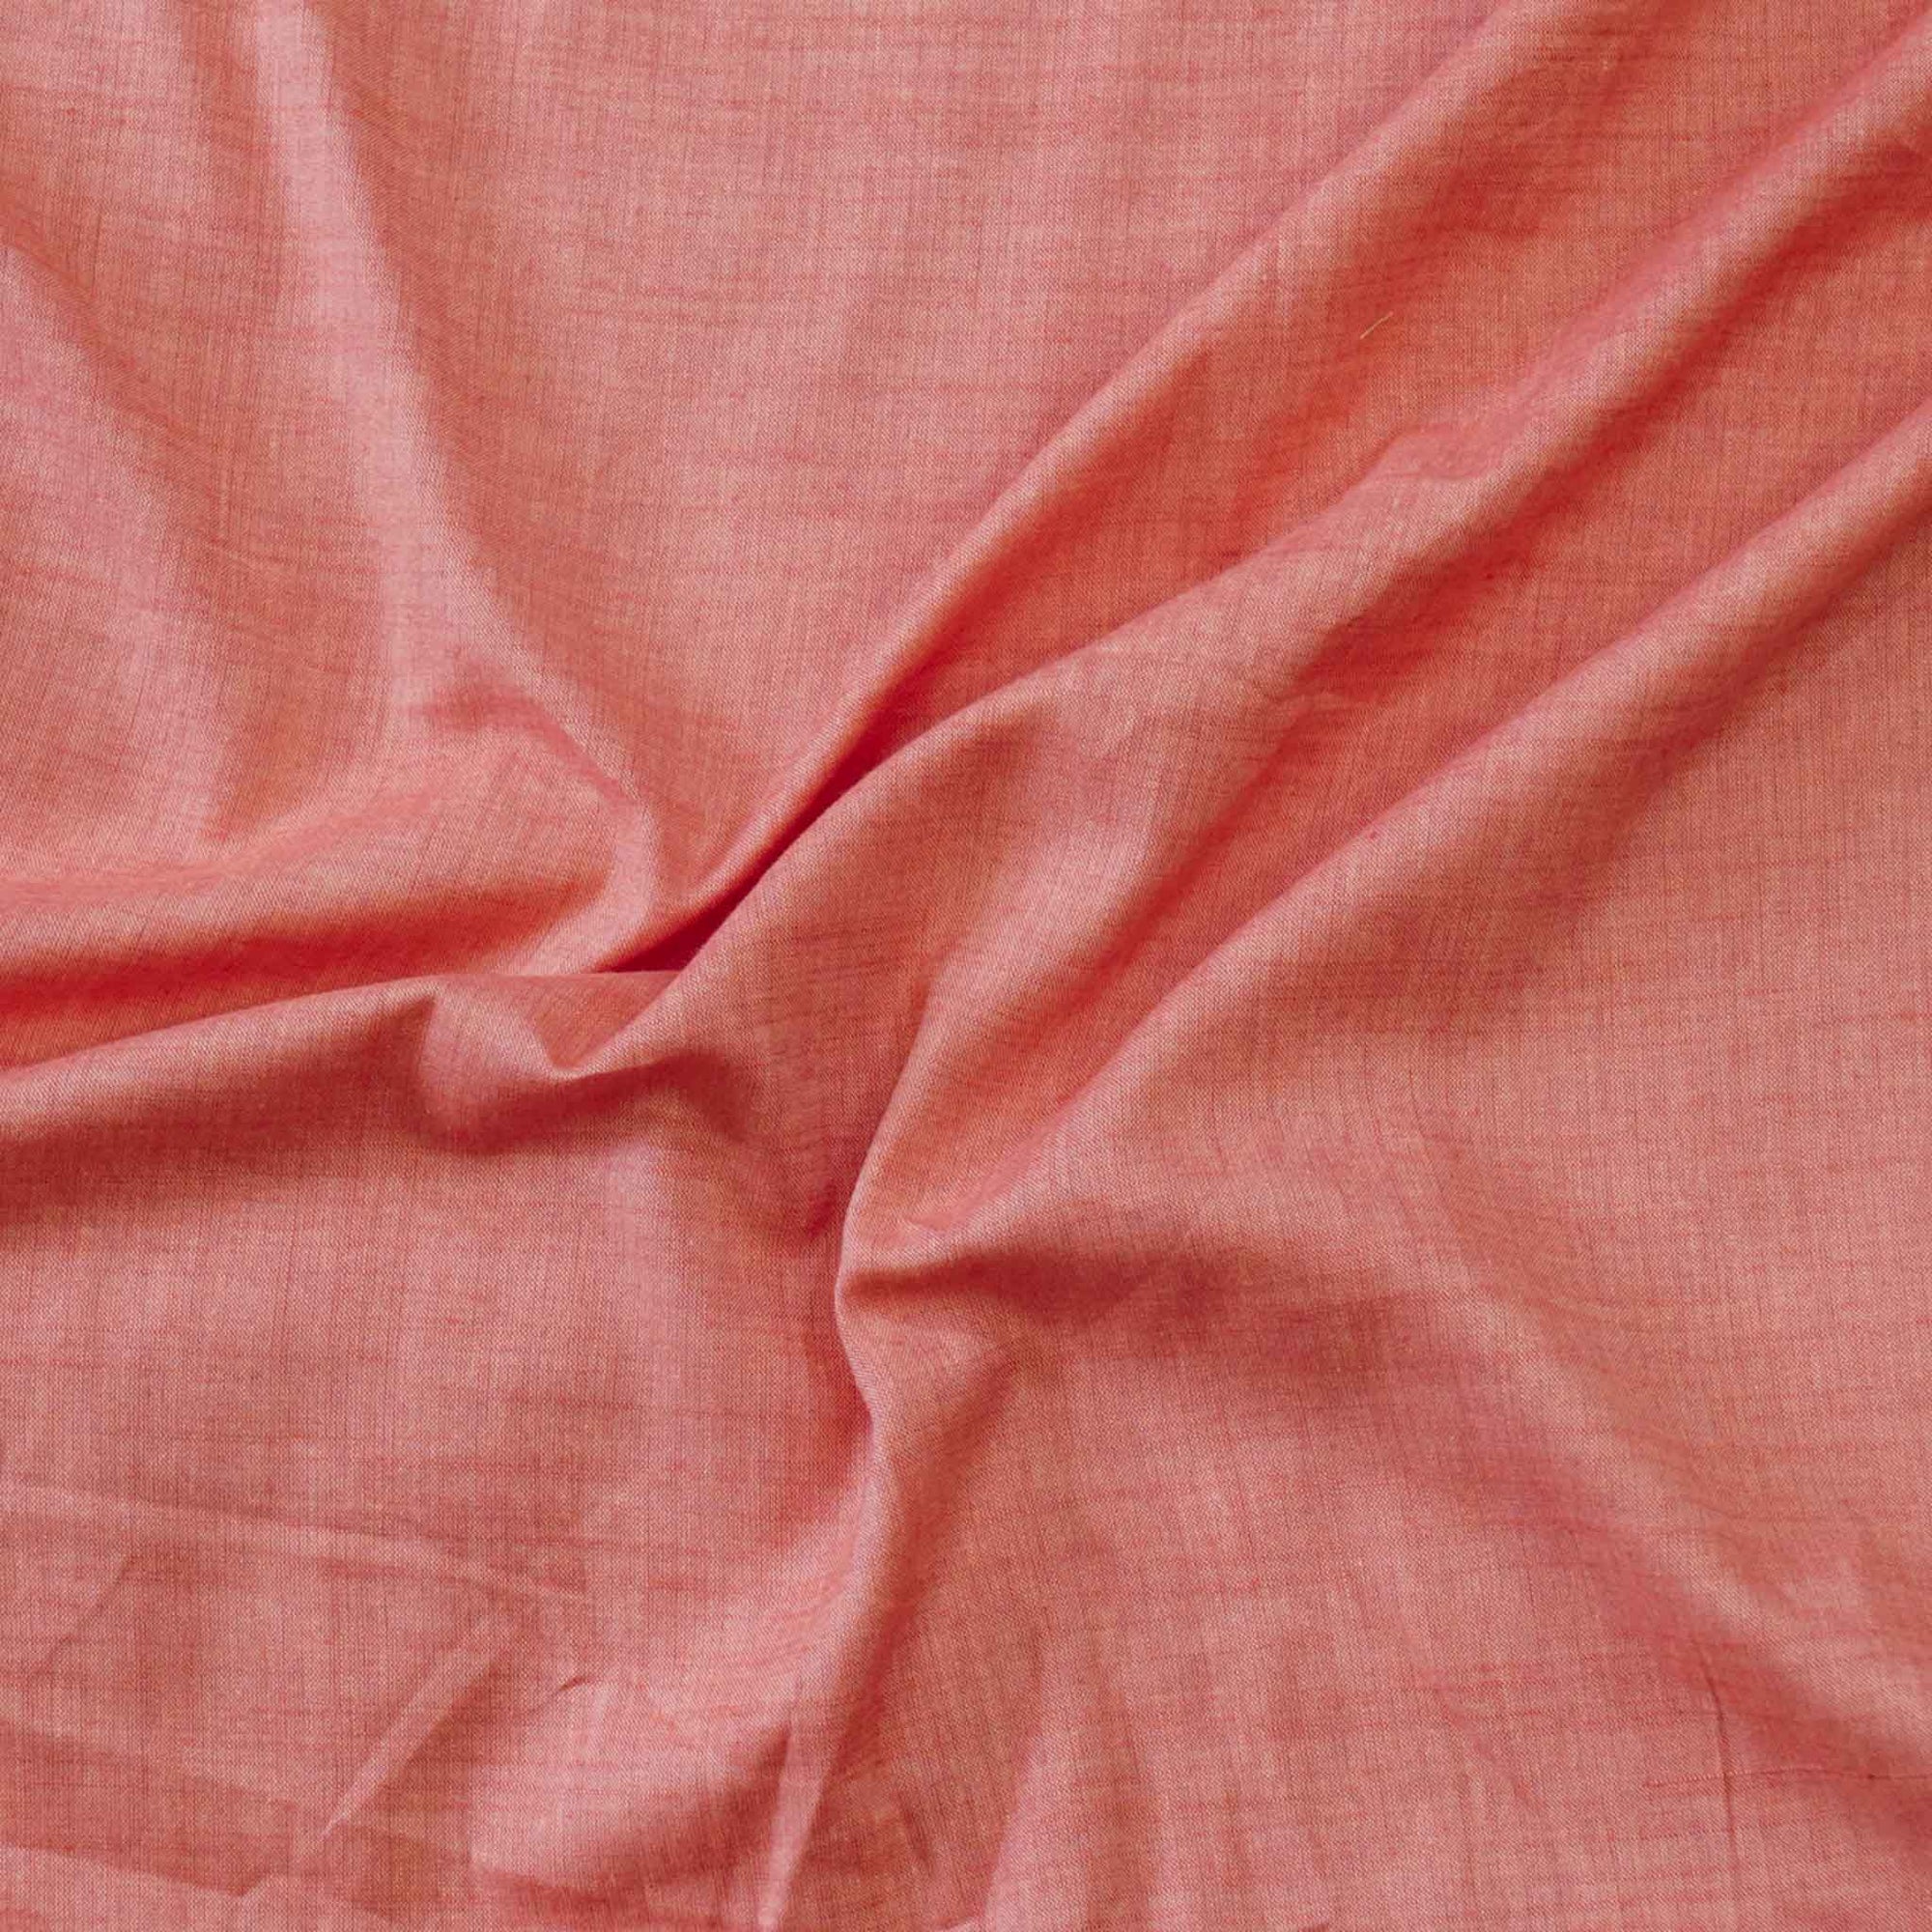 Rayon Slub Cotton Fabric Peach